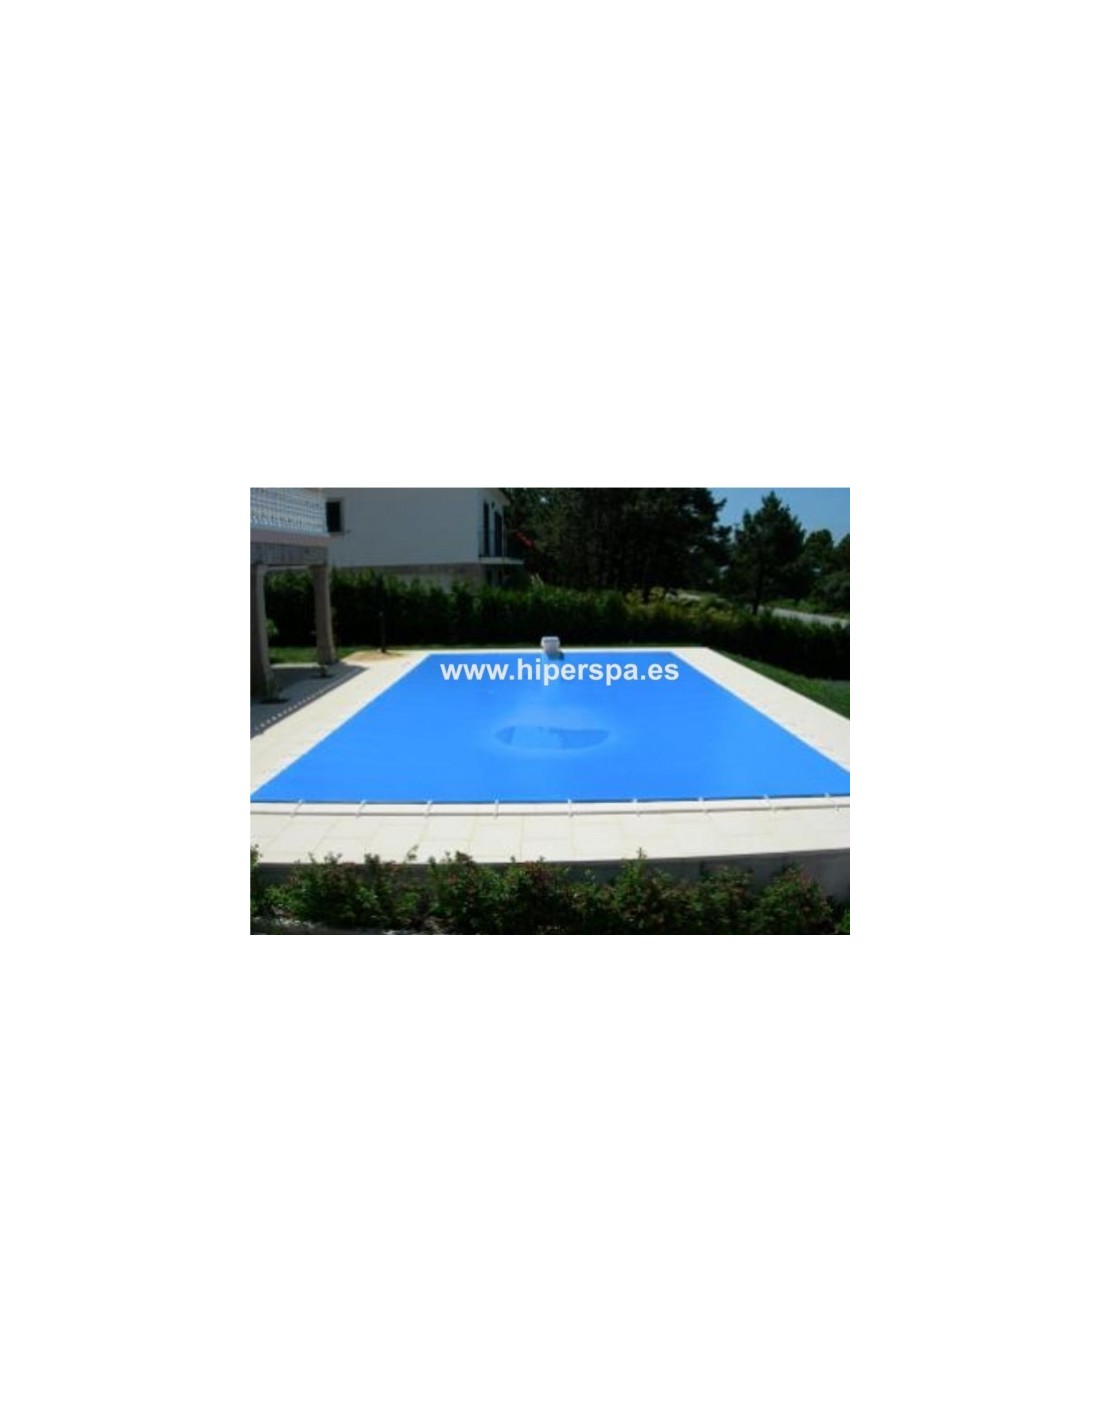 Lona piscina 8x4  Expertos en cubiertas de piscina